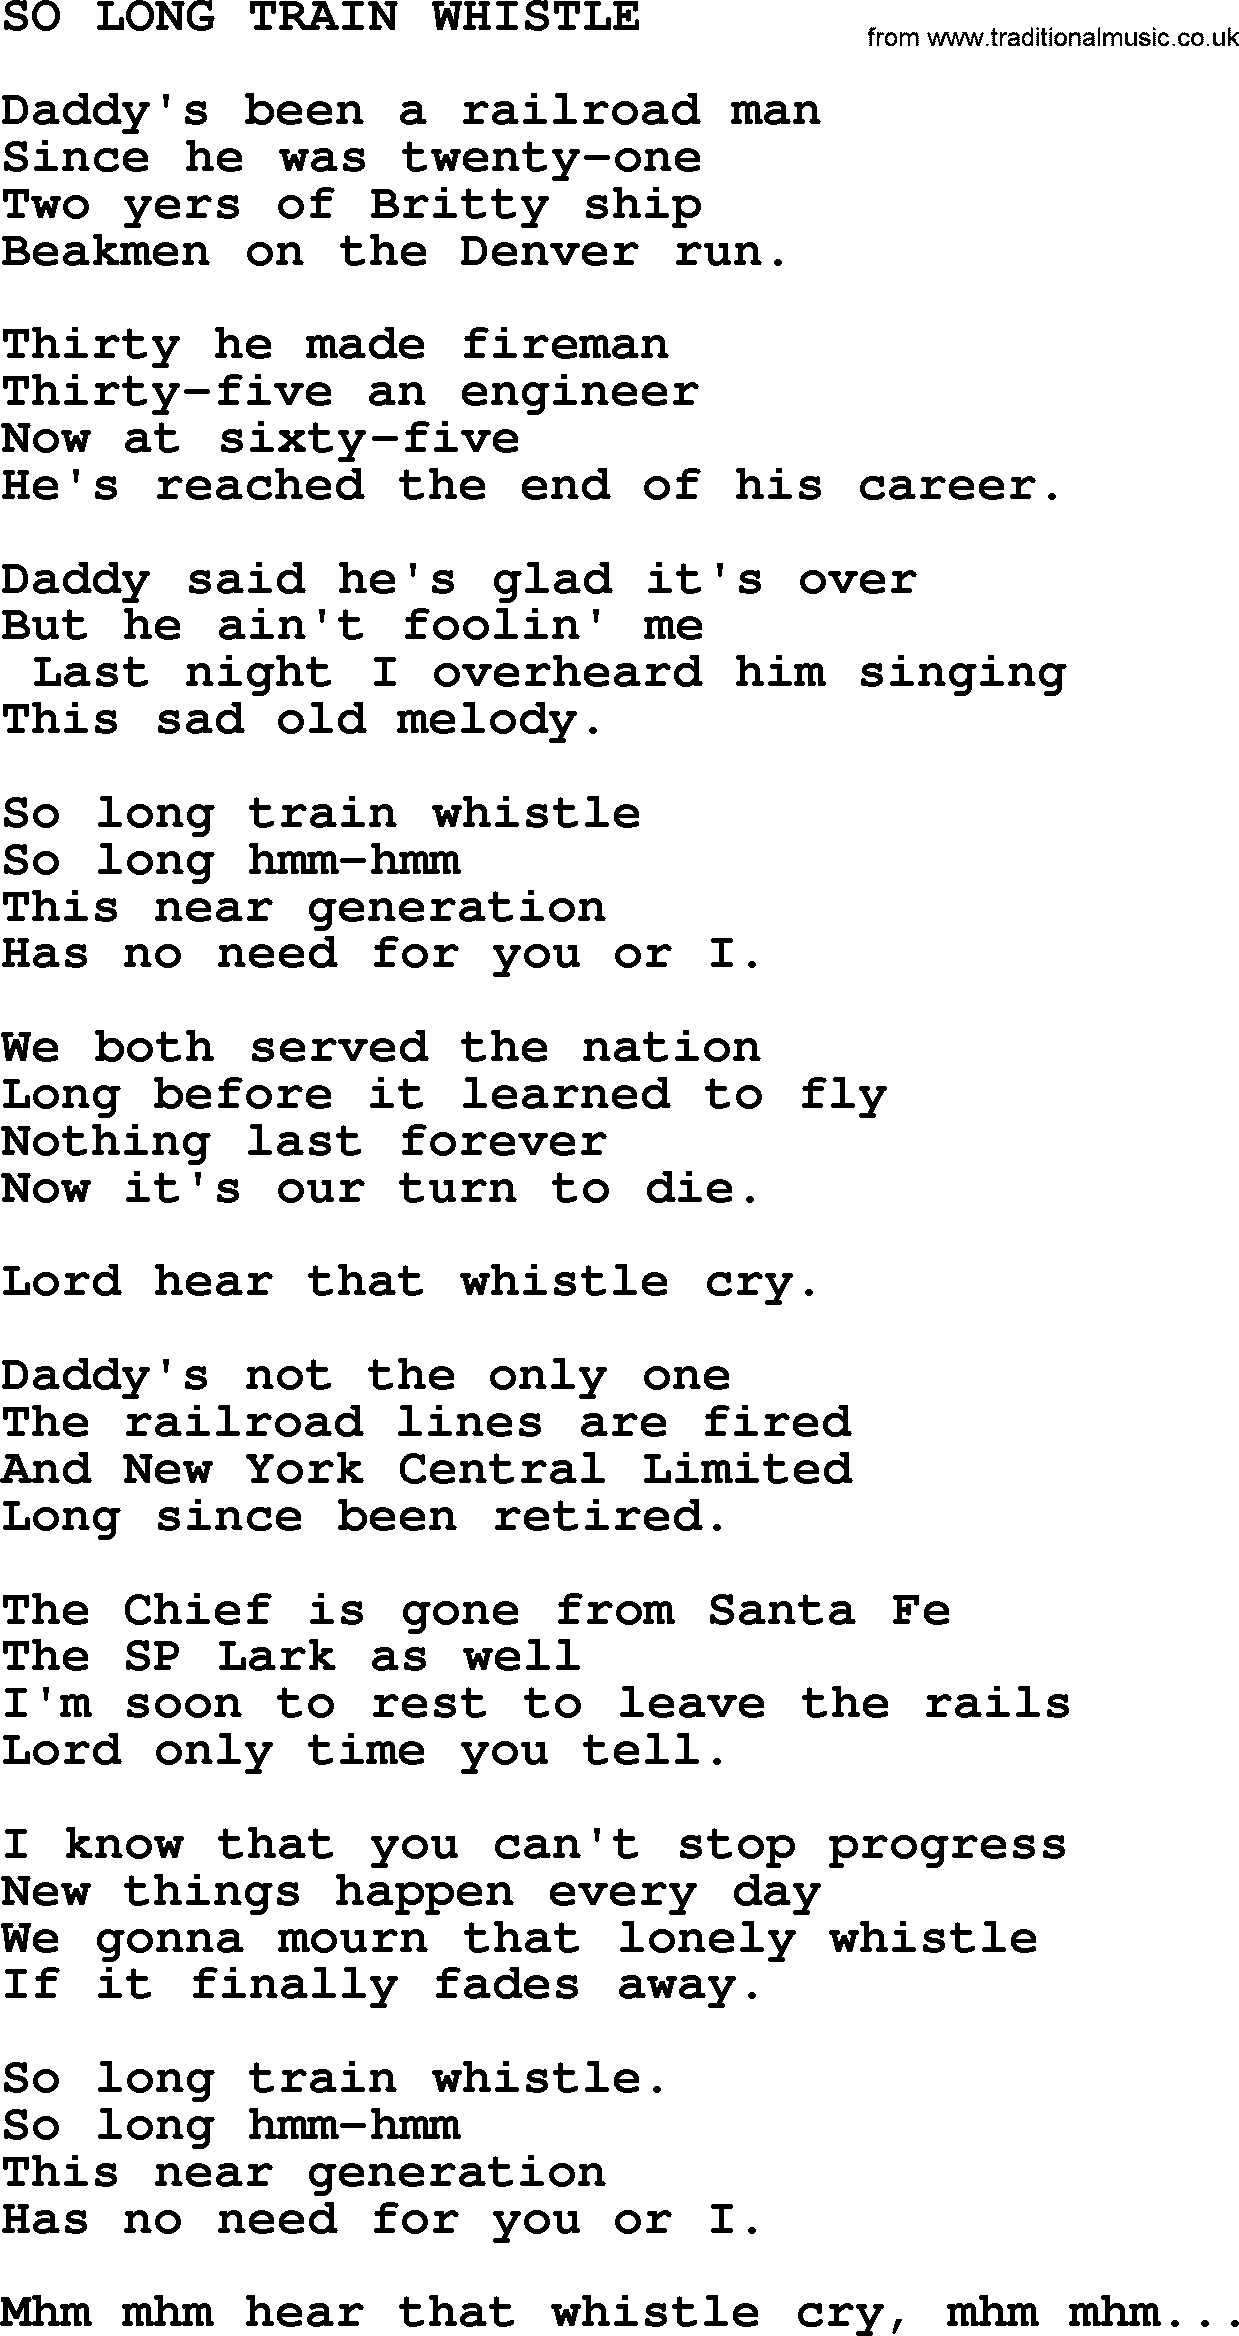 Merle Haggard song: So Long Train Whistle, lyrics.